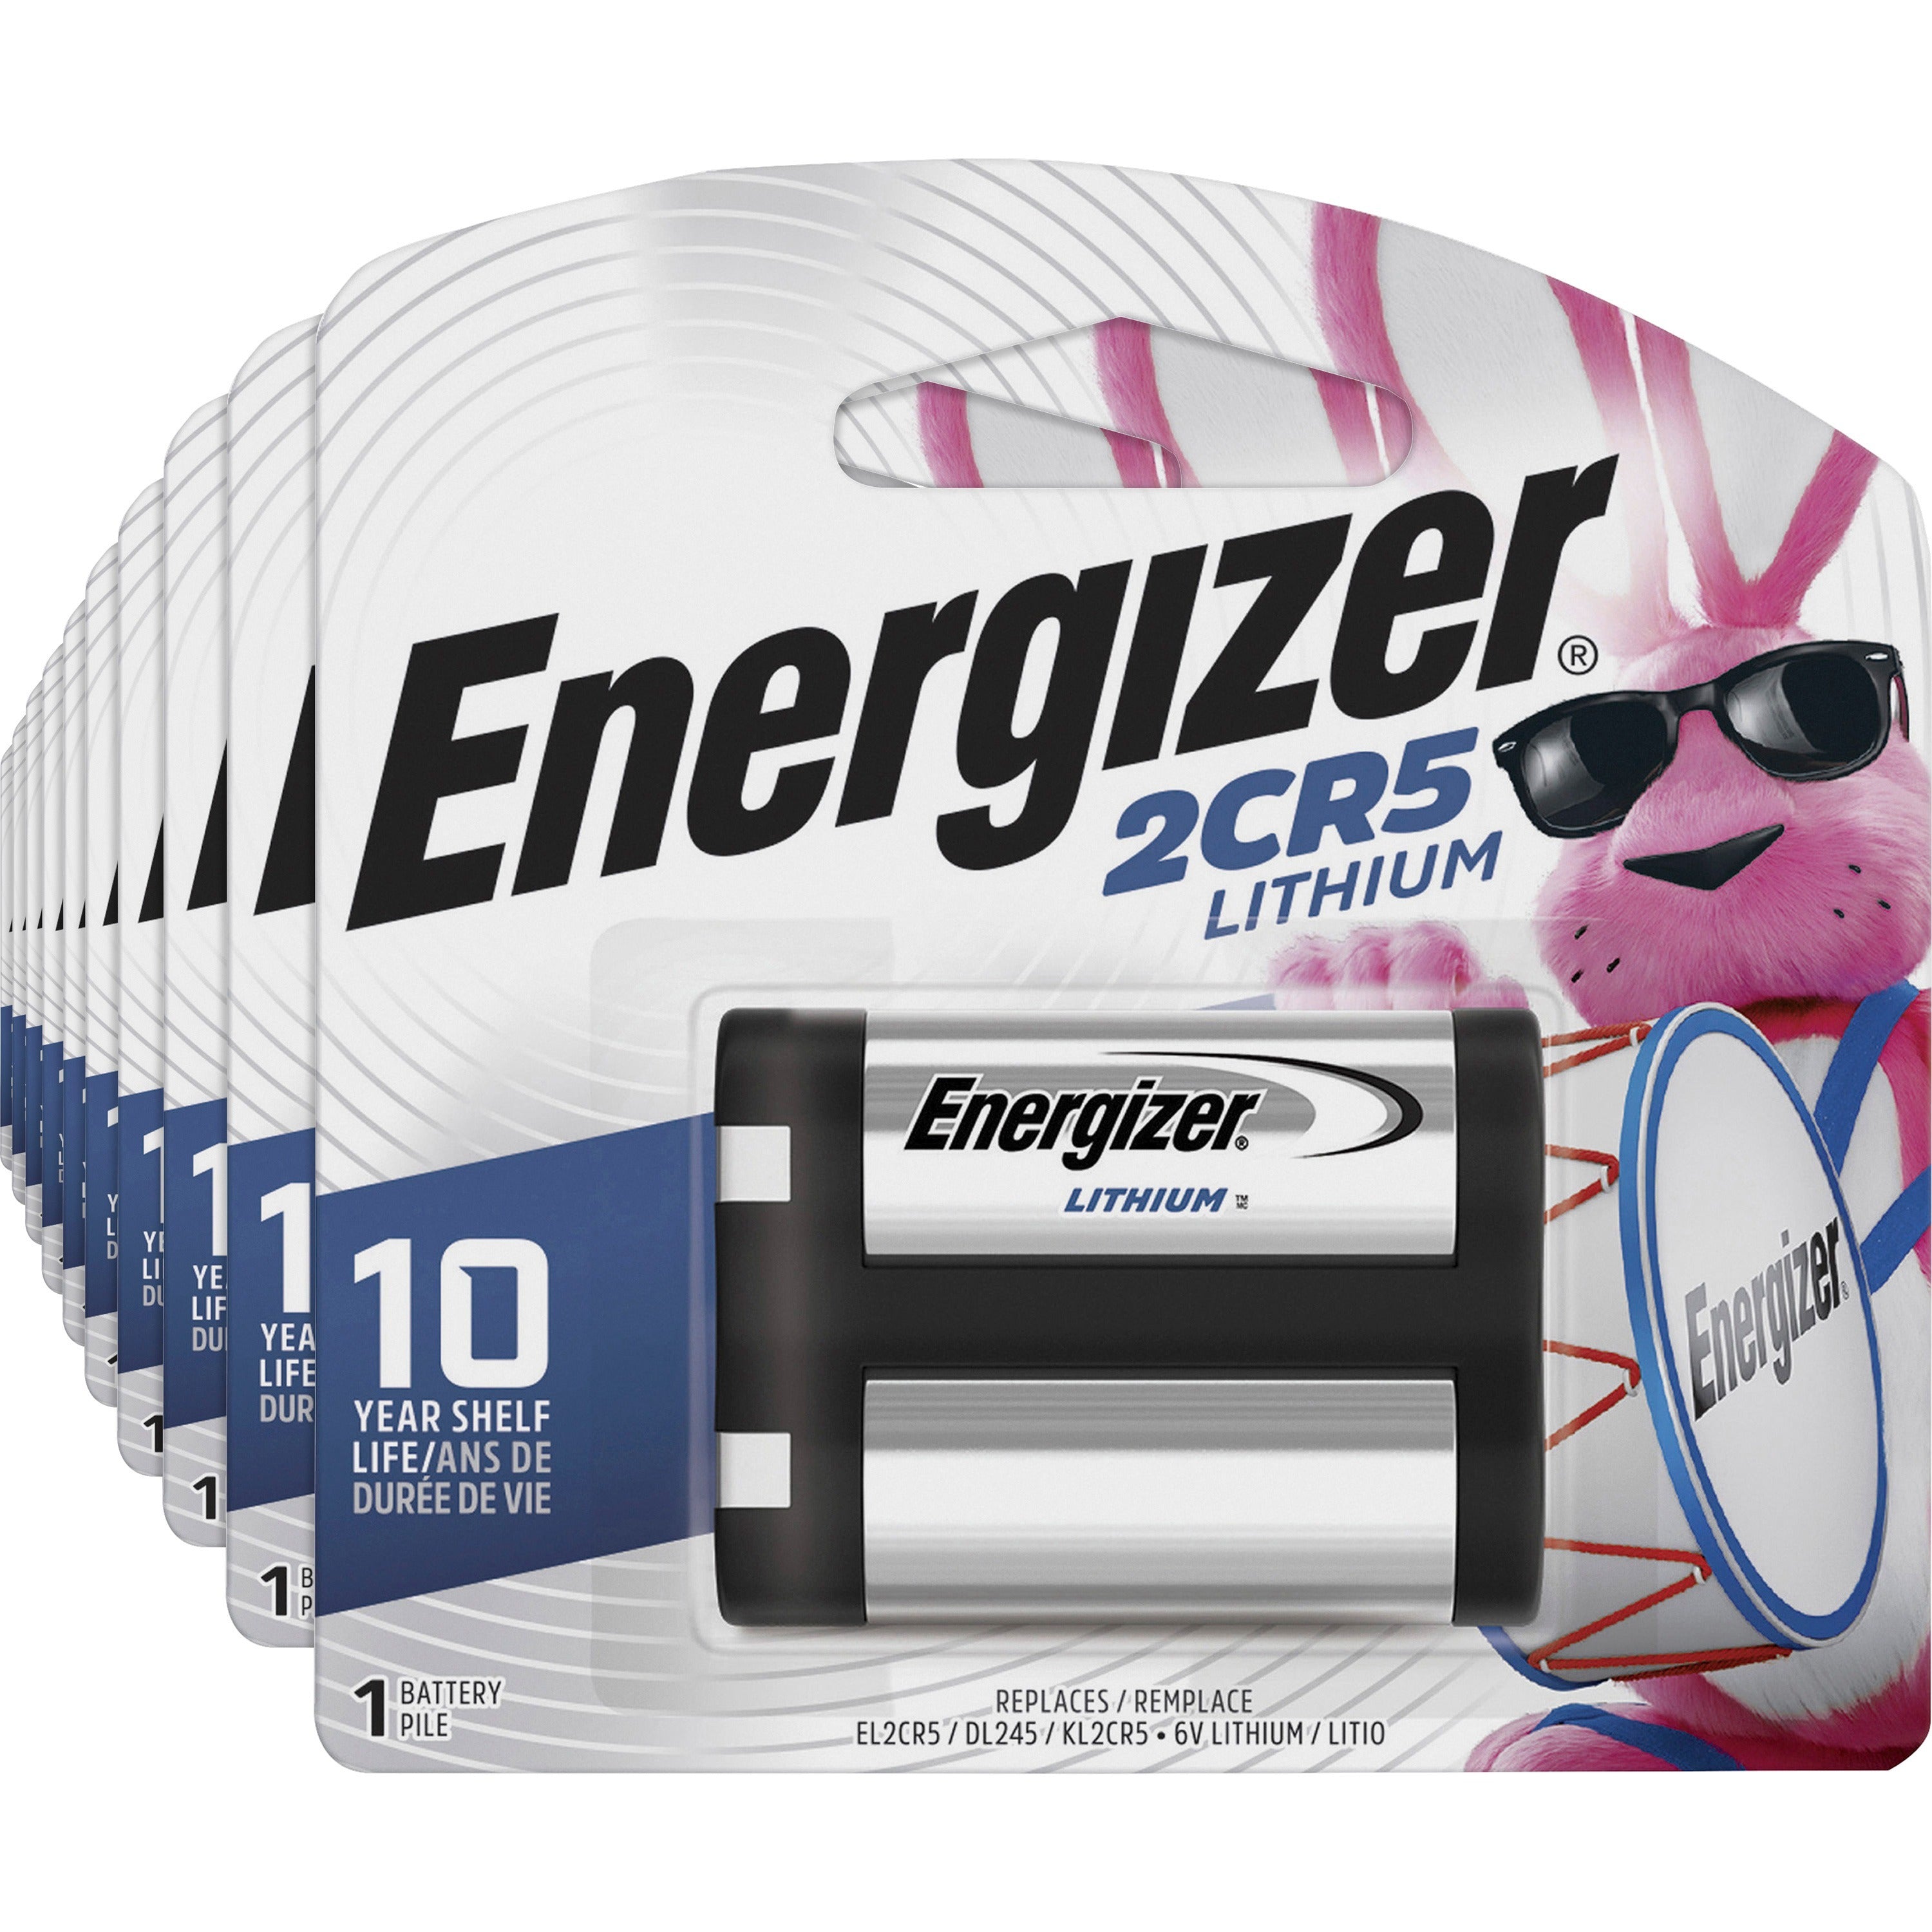 energizer-2cr5-lithium-photo-battery-boxes-of-6-for-multipurpose-2cr5-6v-dc-6-batteries-box-4-box-carton_eveel2cr5bpct - 1